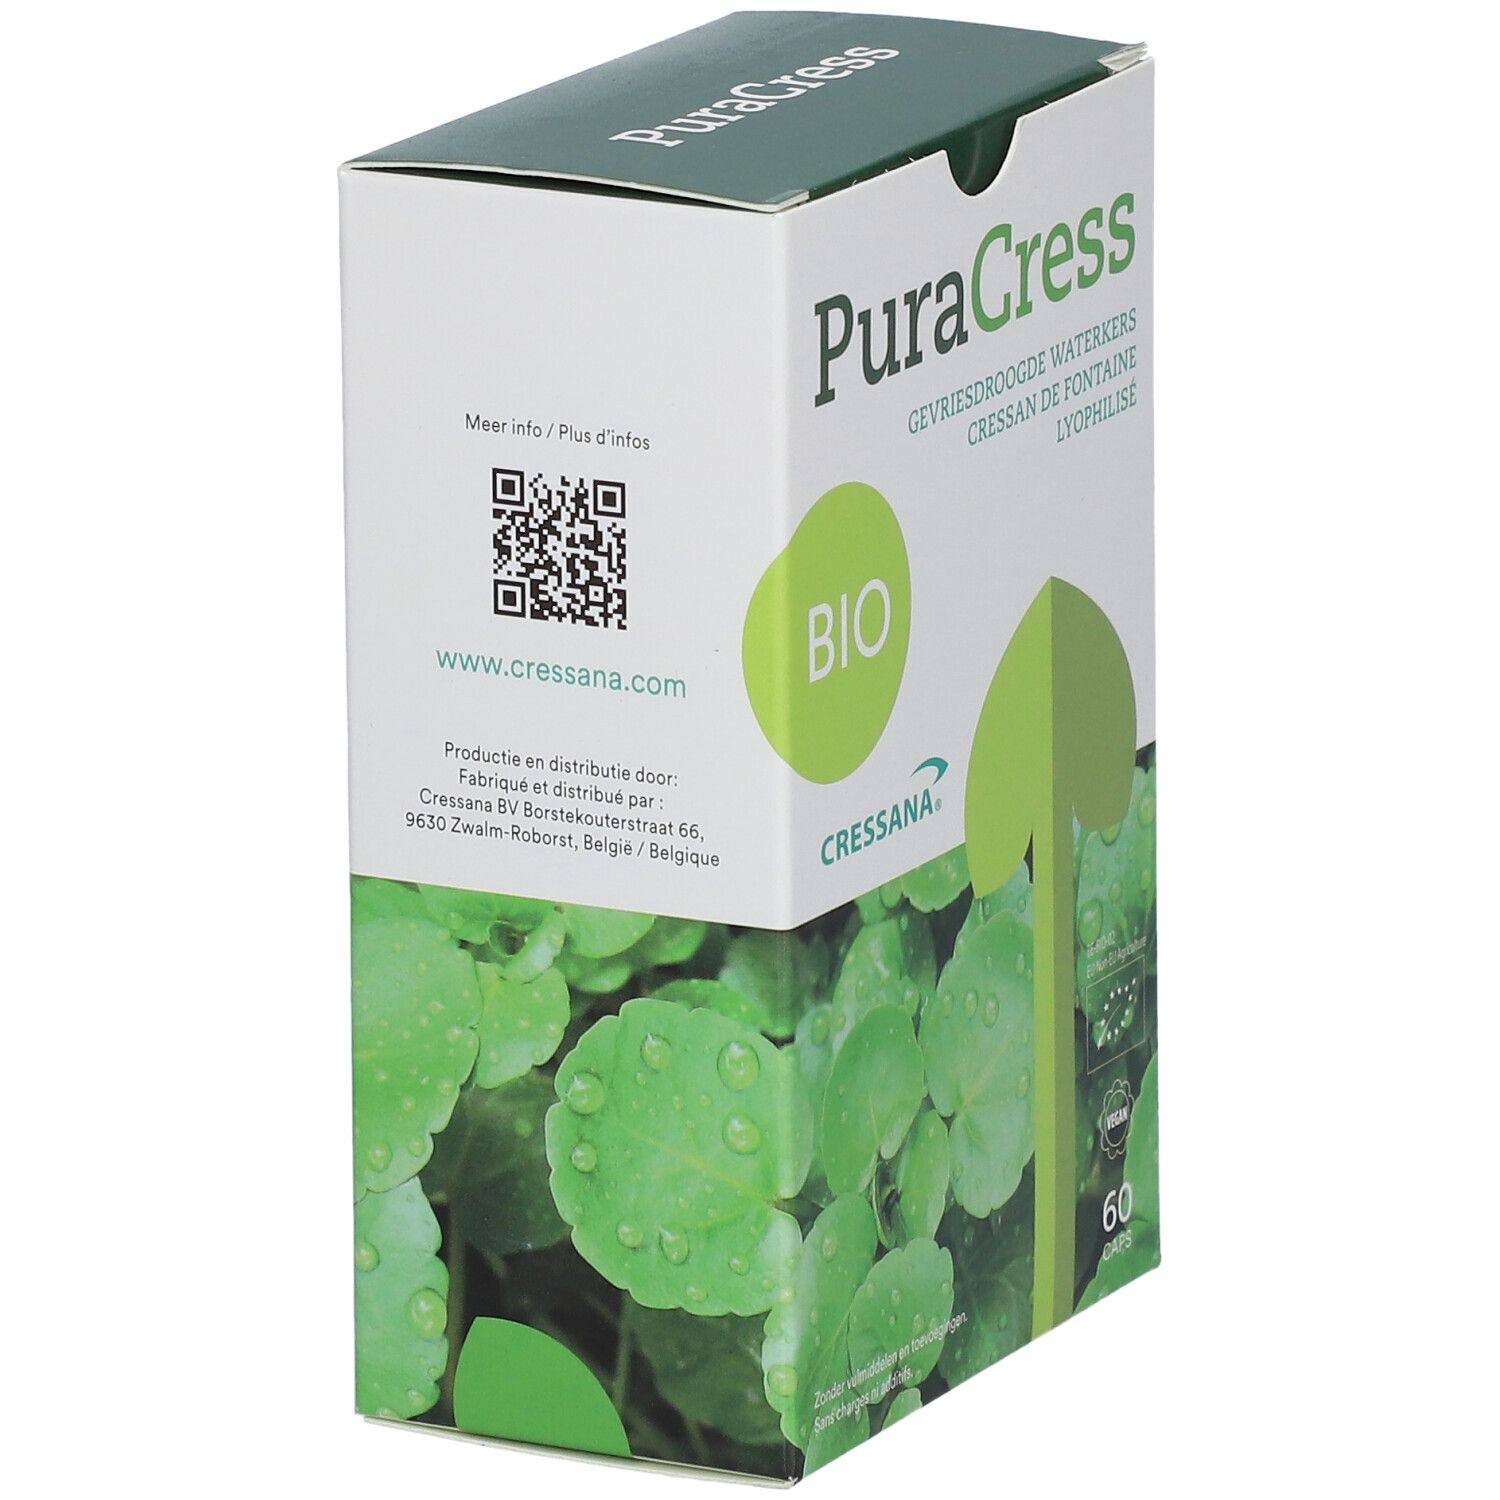 Puracress 375 mg